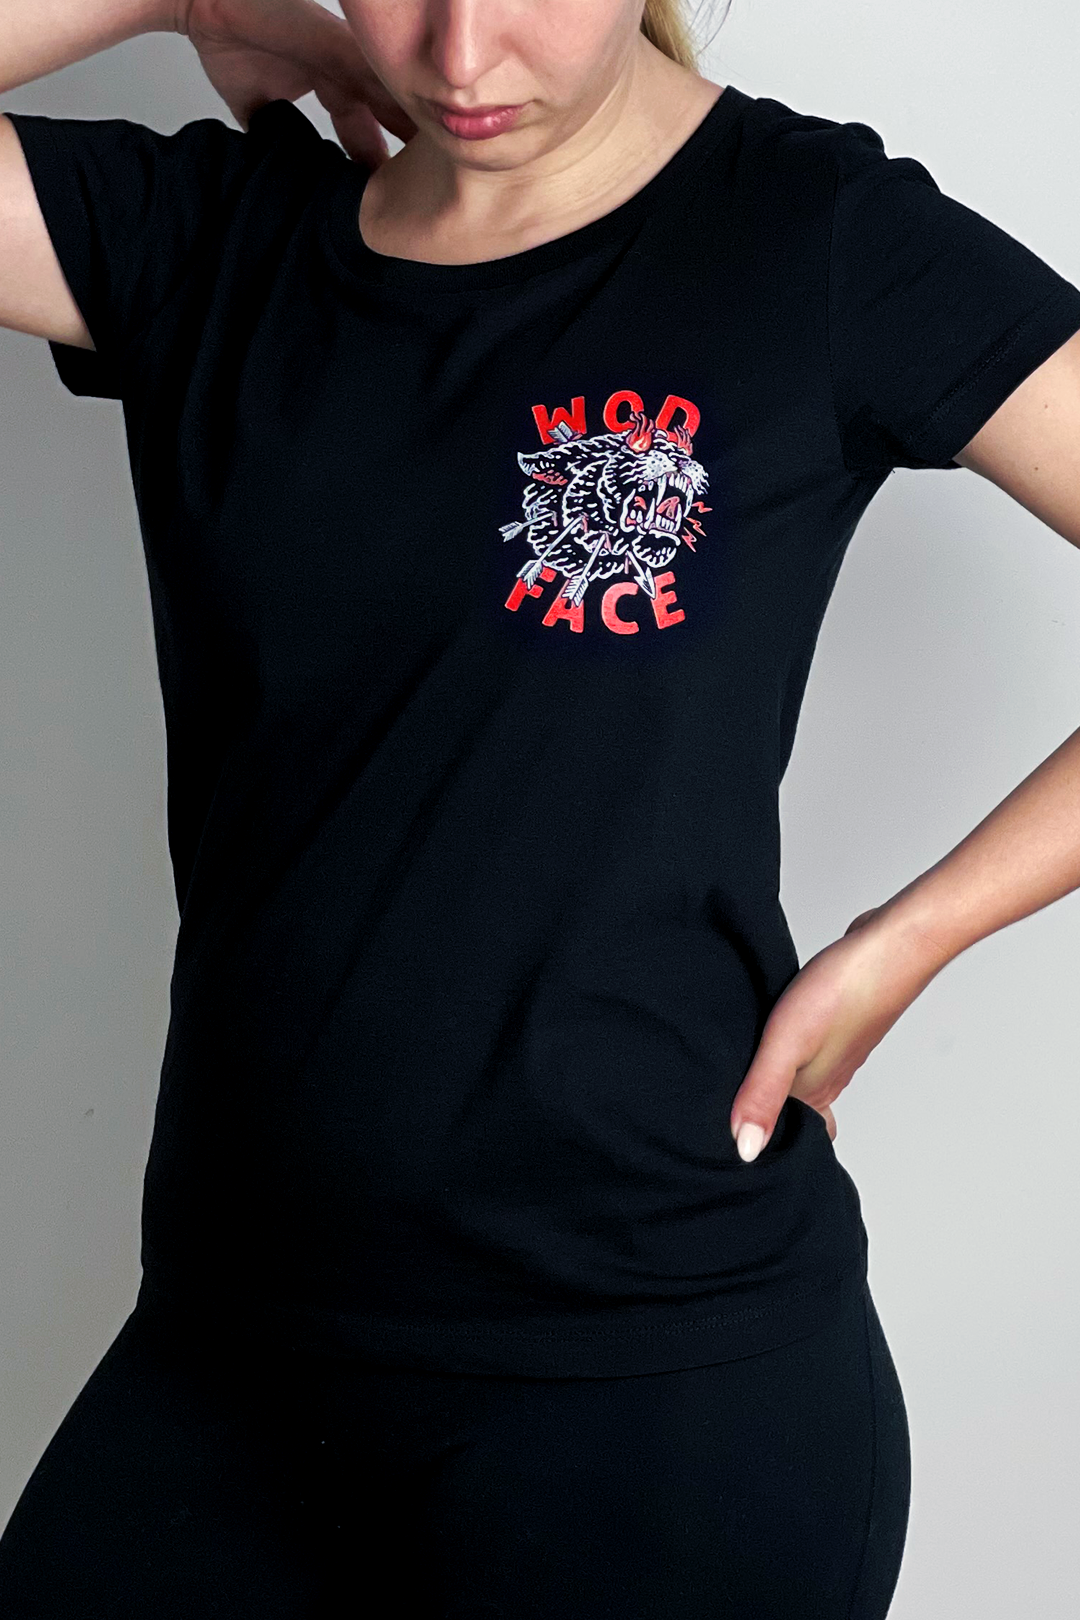 Wod Face (women)